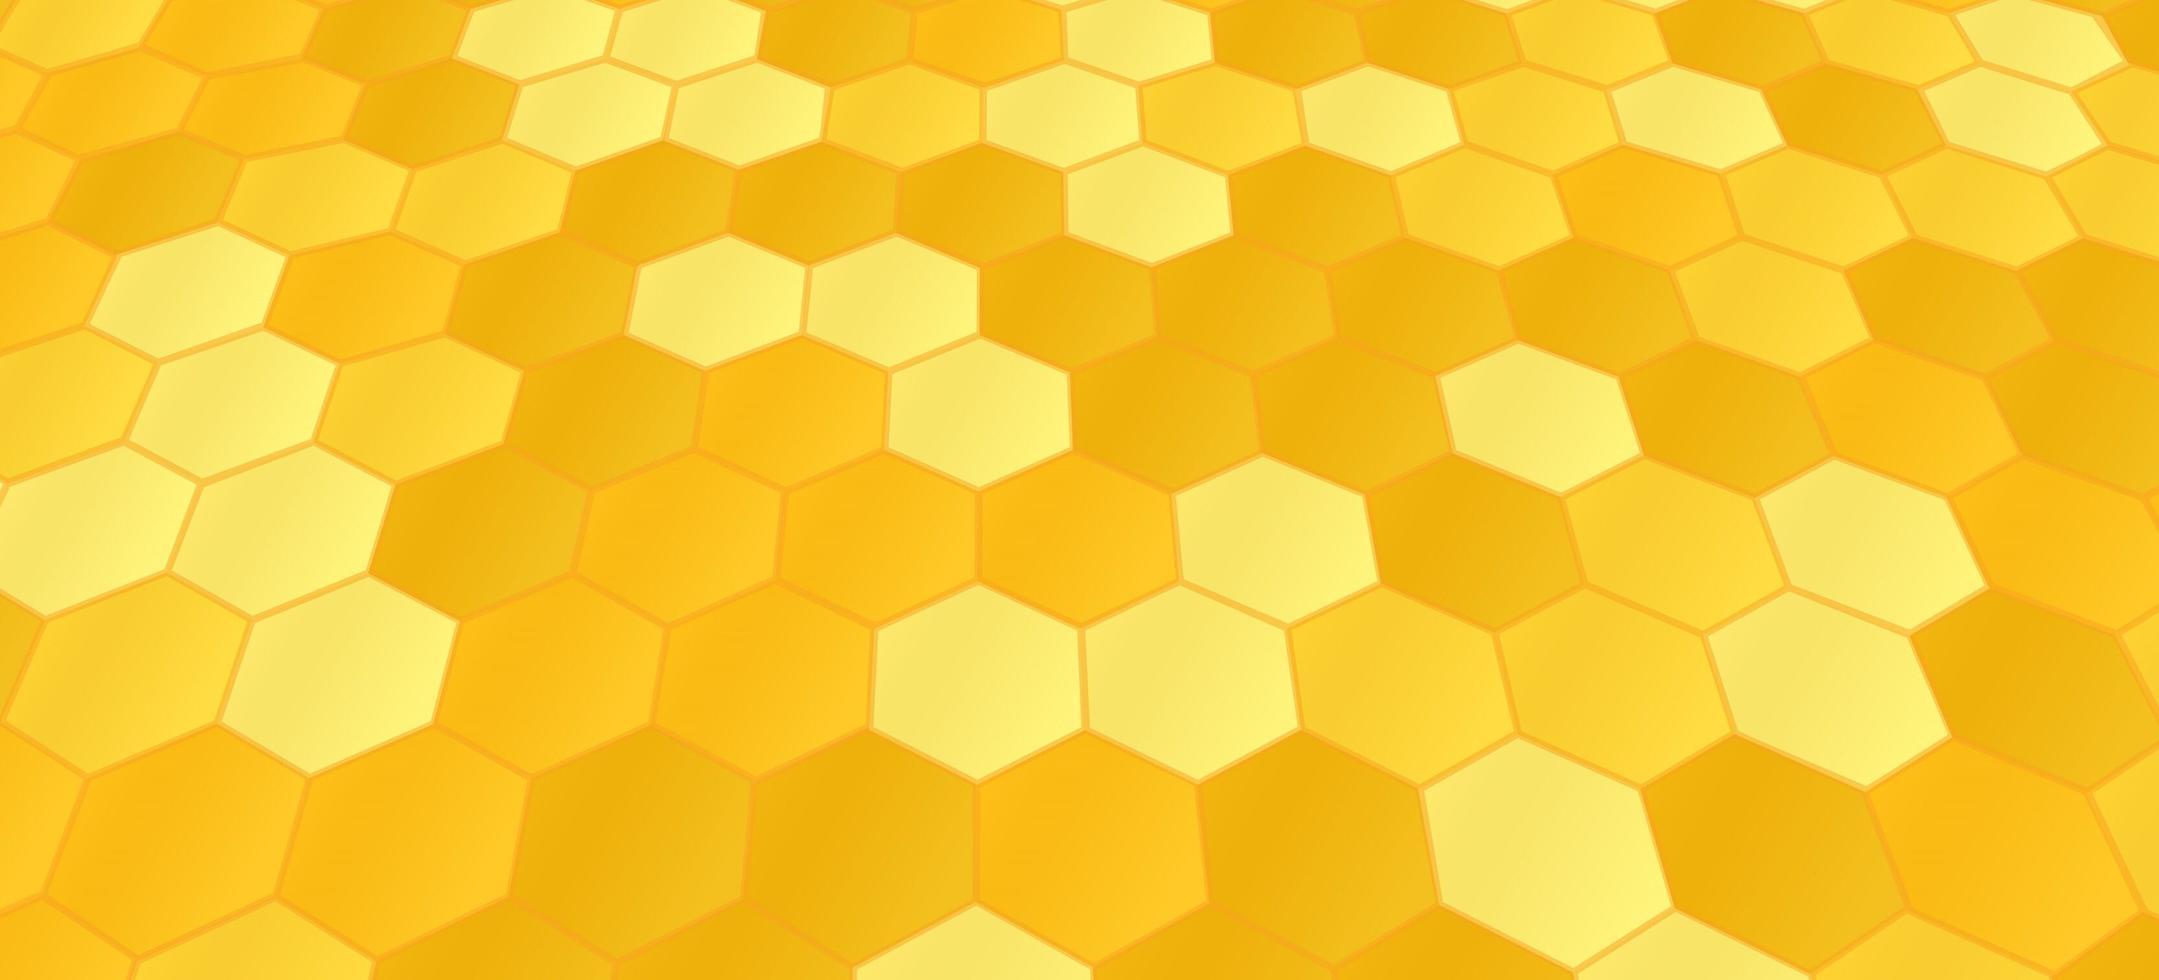 Yellow honeycomb background vector illustration.